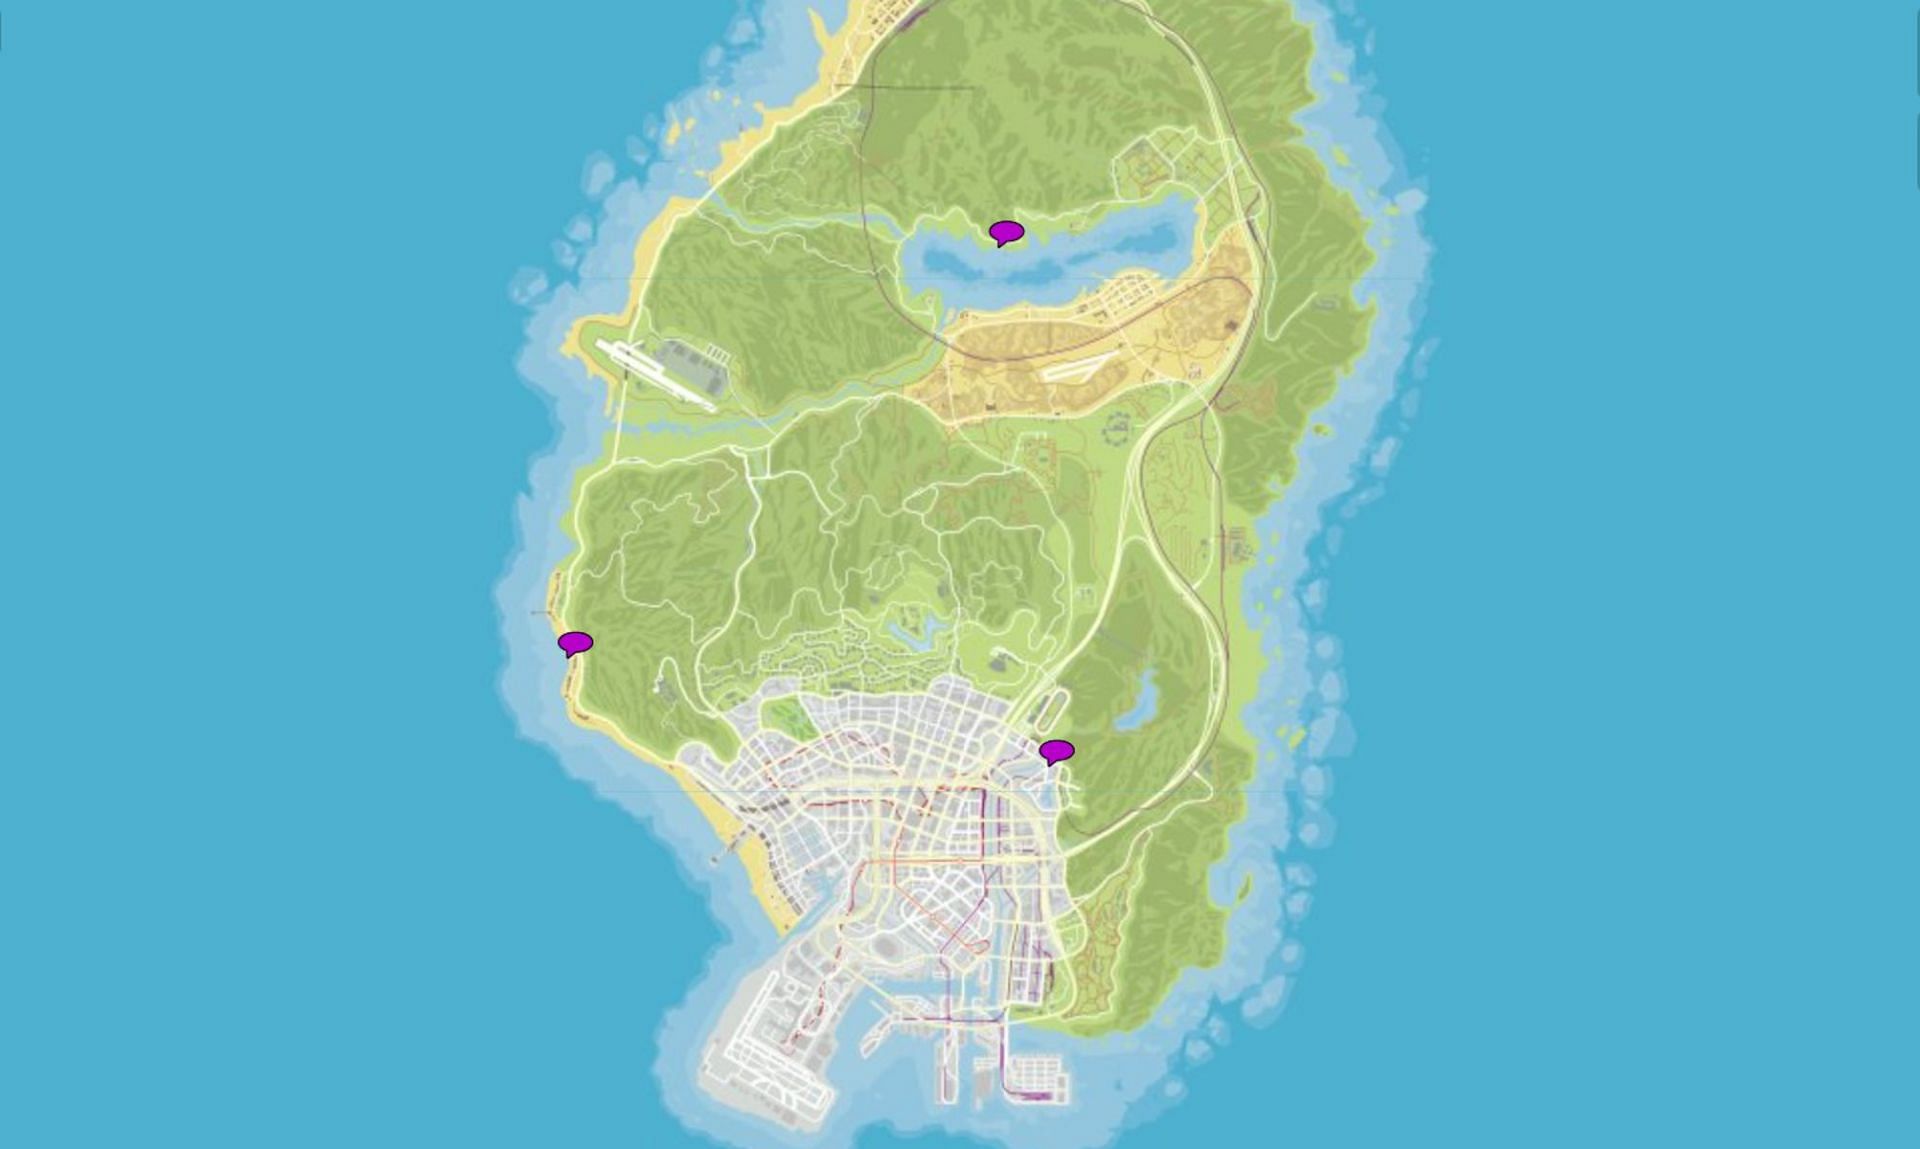 All three current locations (Image via GTAWeb.eu)